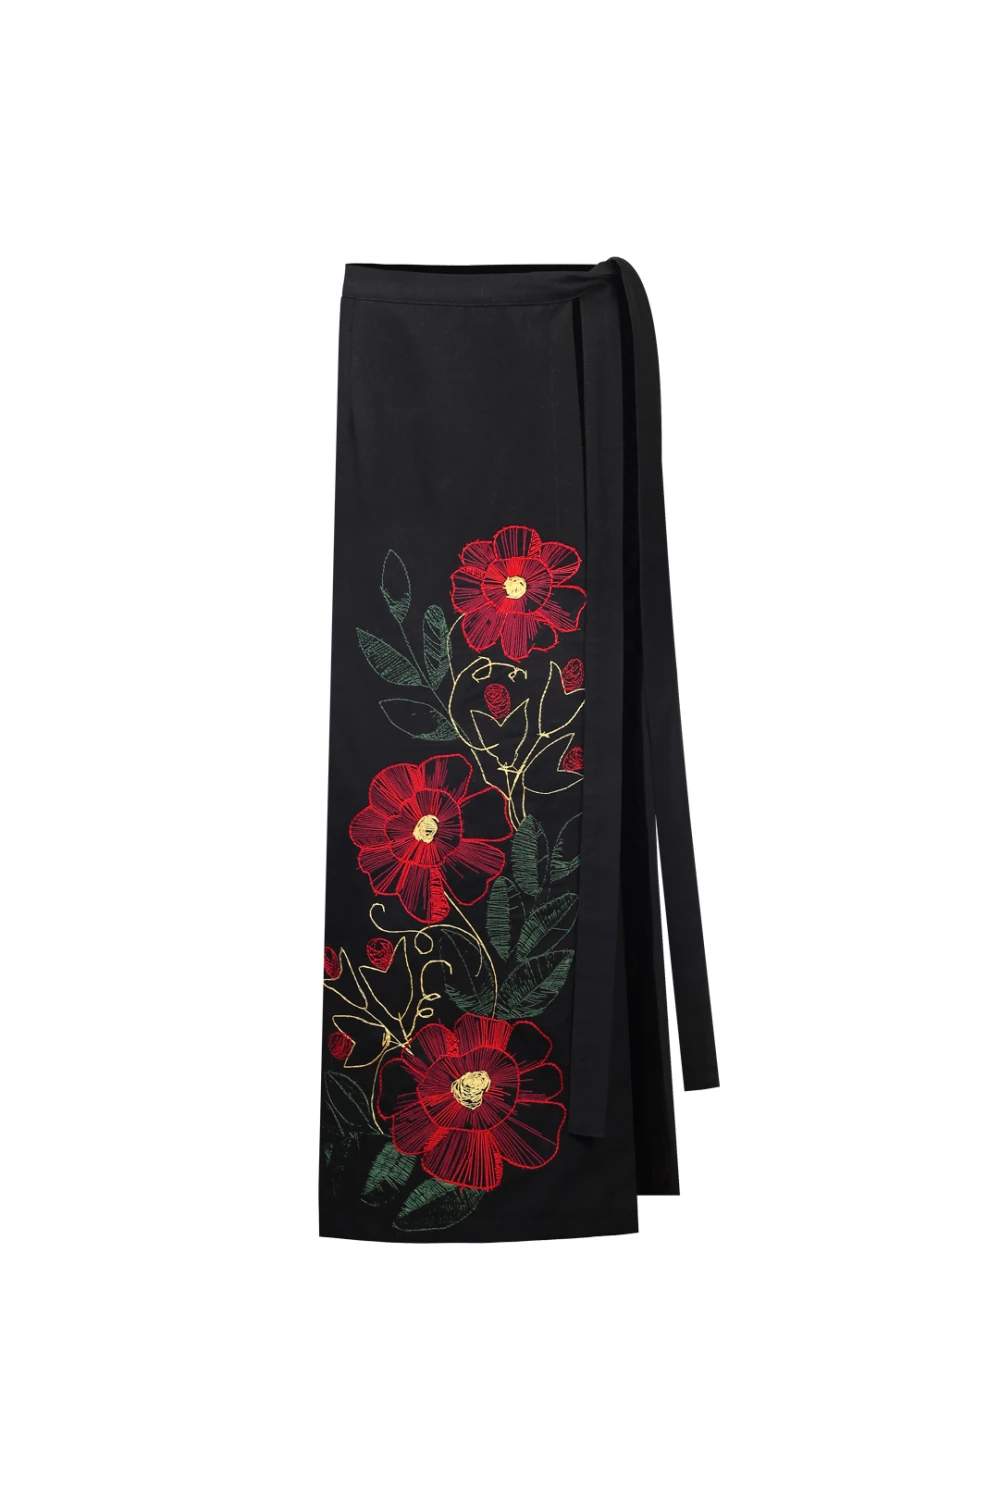 skirt kvity in black color